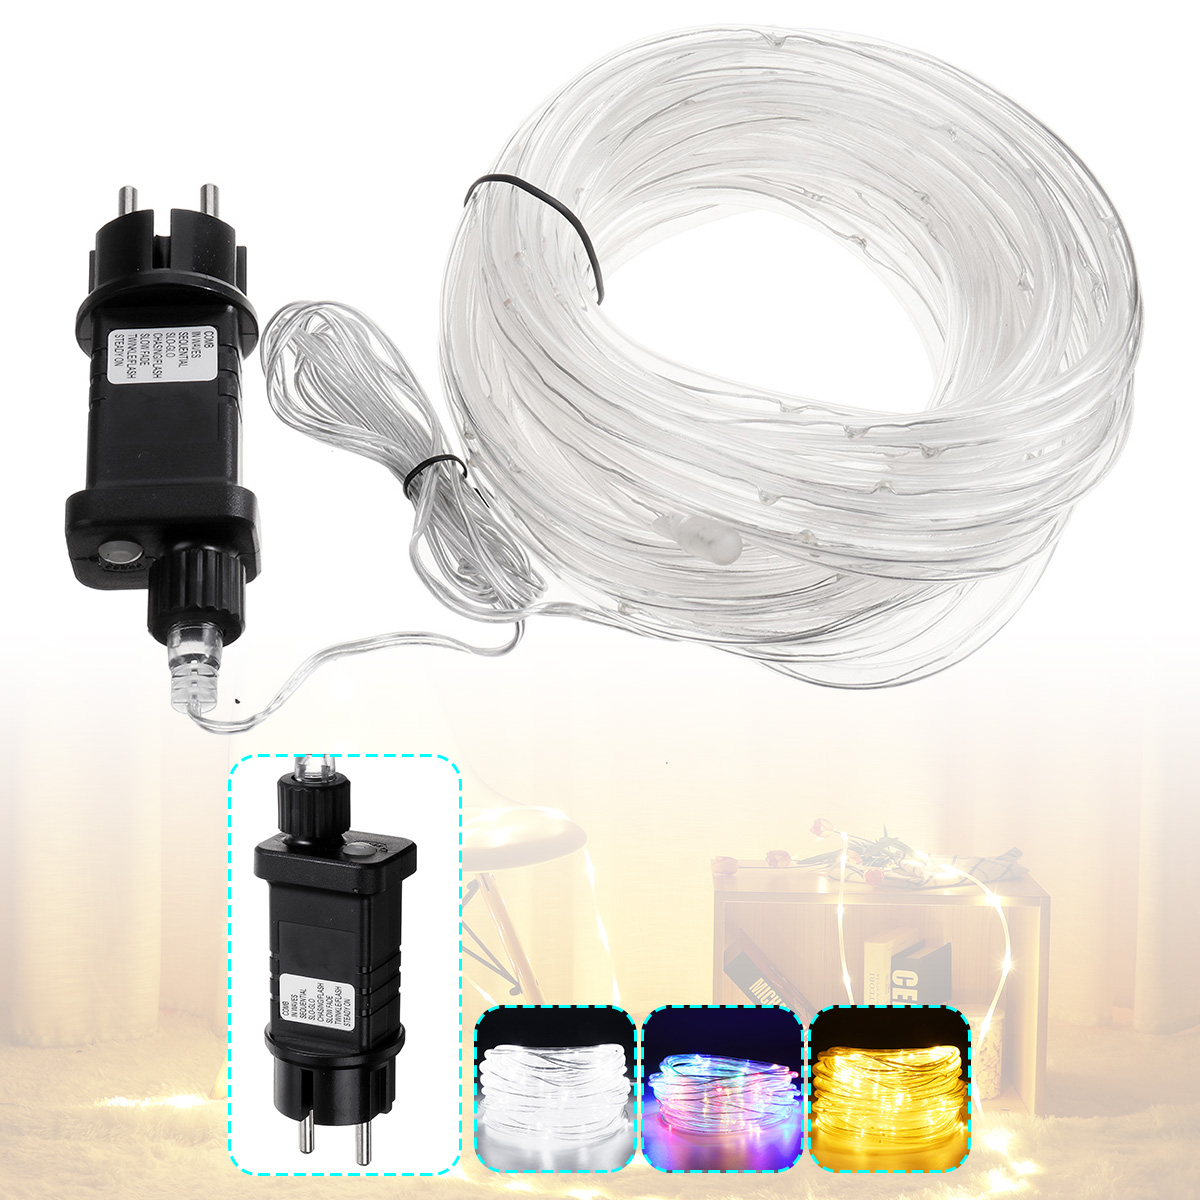 10M-100LED-Outdoor-Tube-Rope-Strip-String-Light-RGB-Lamp-Xmas-Home-Decor-Lights-with-EU-Plug-1795566-1